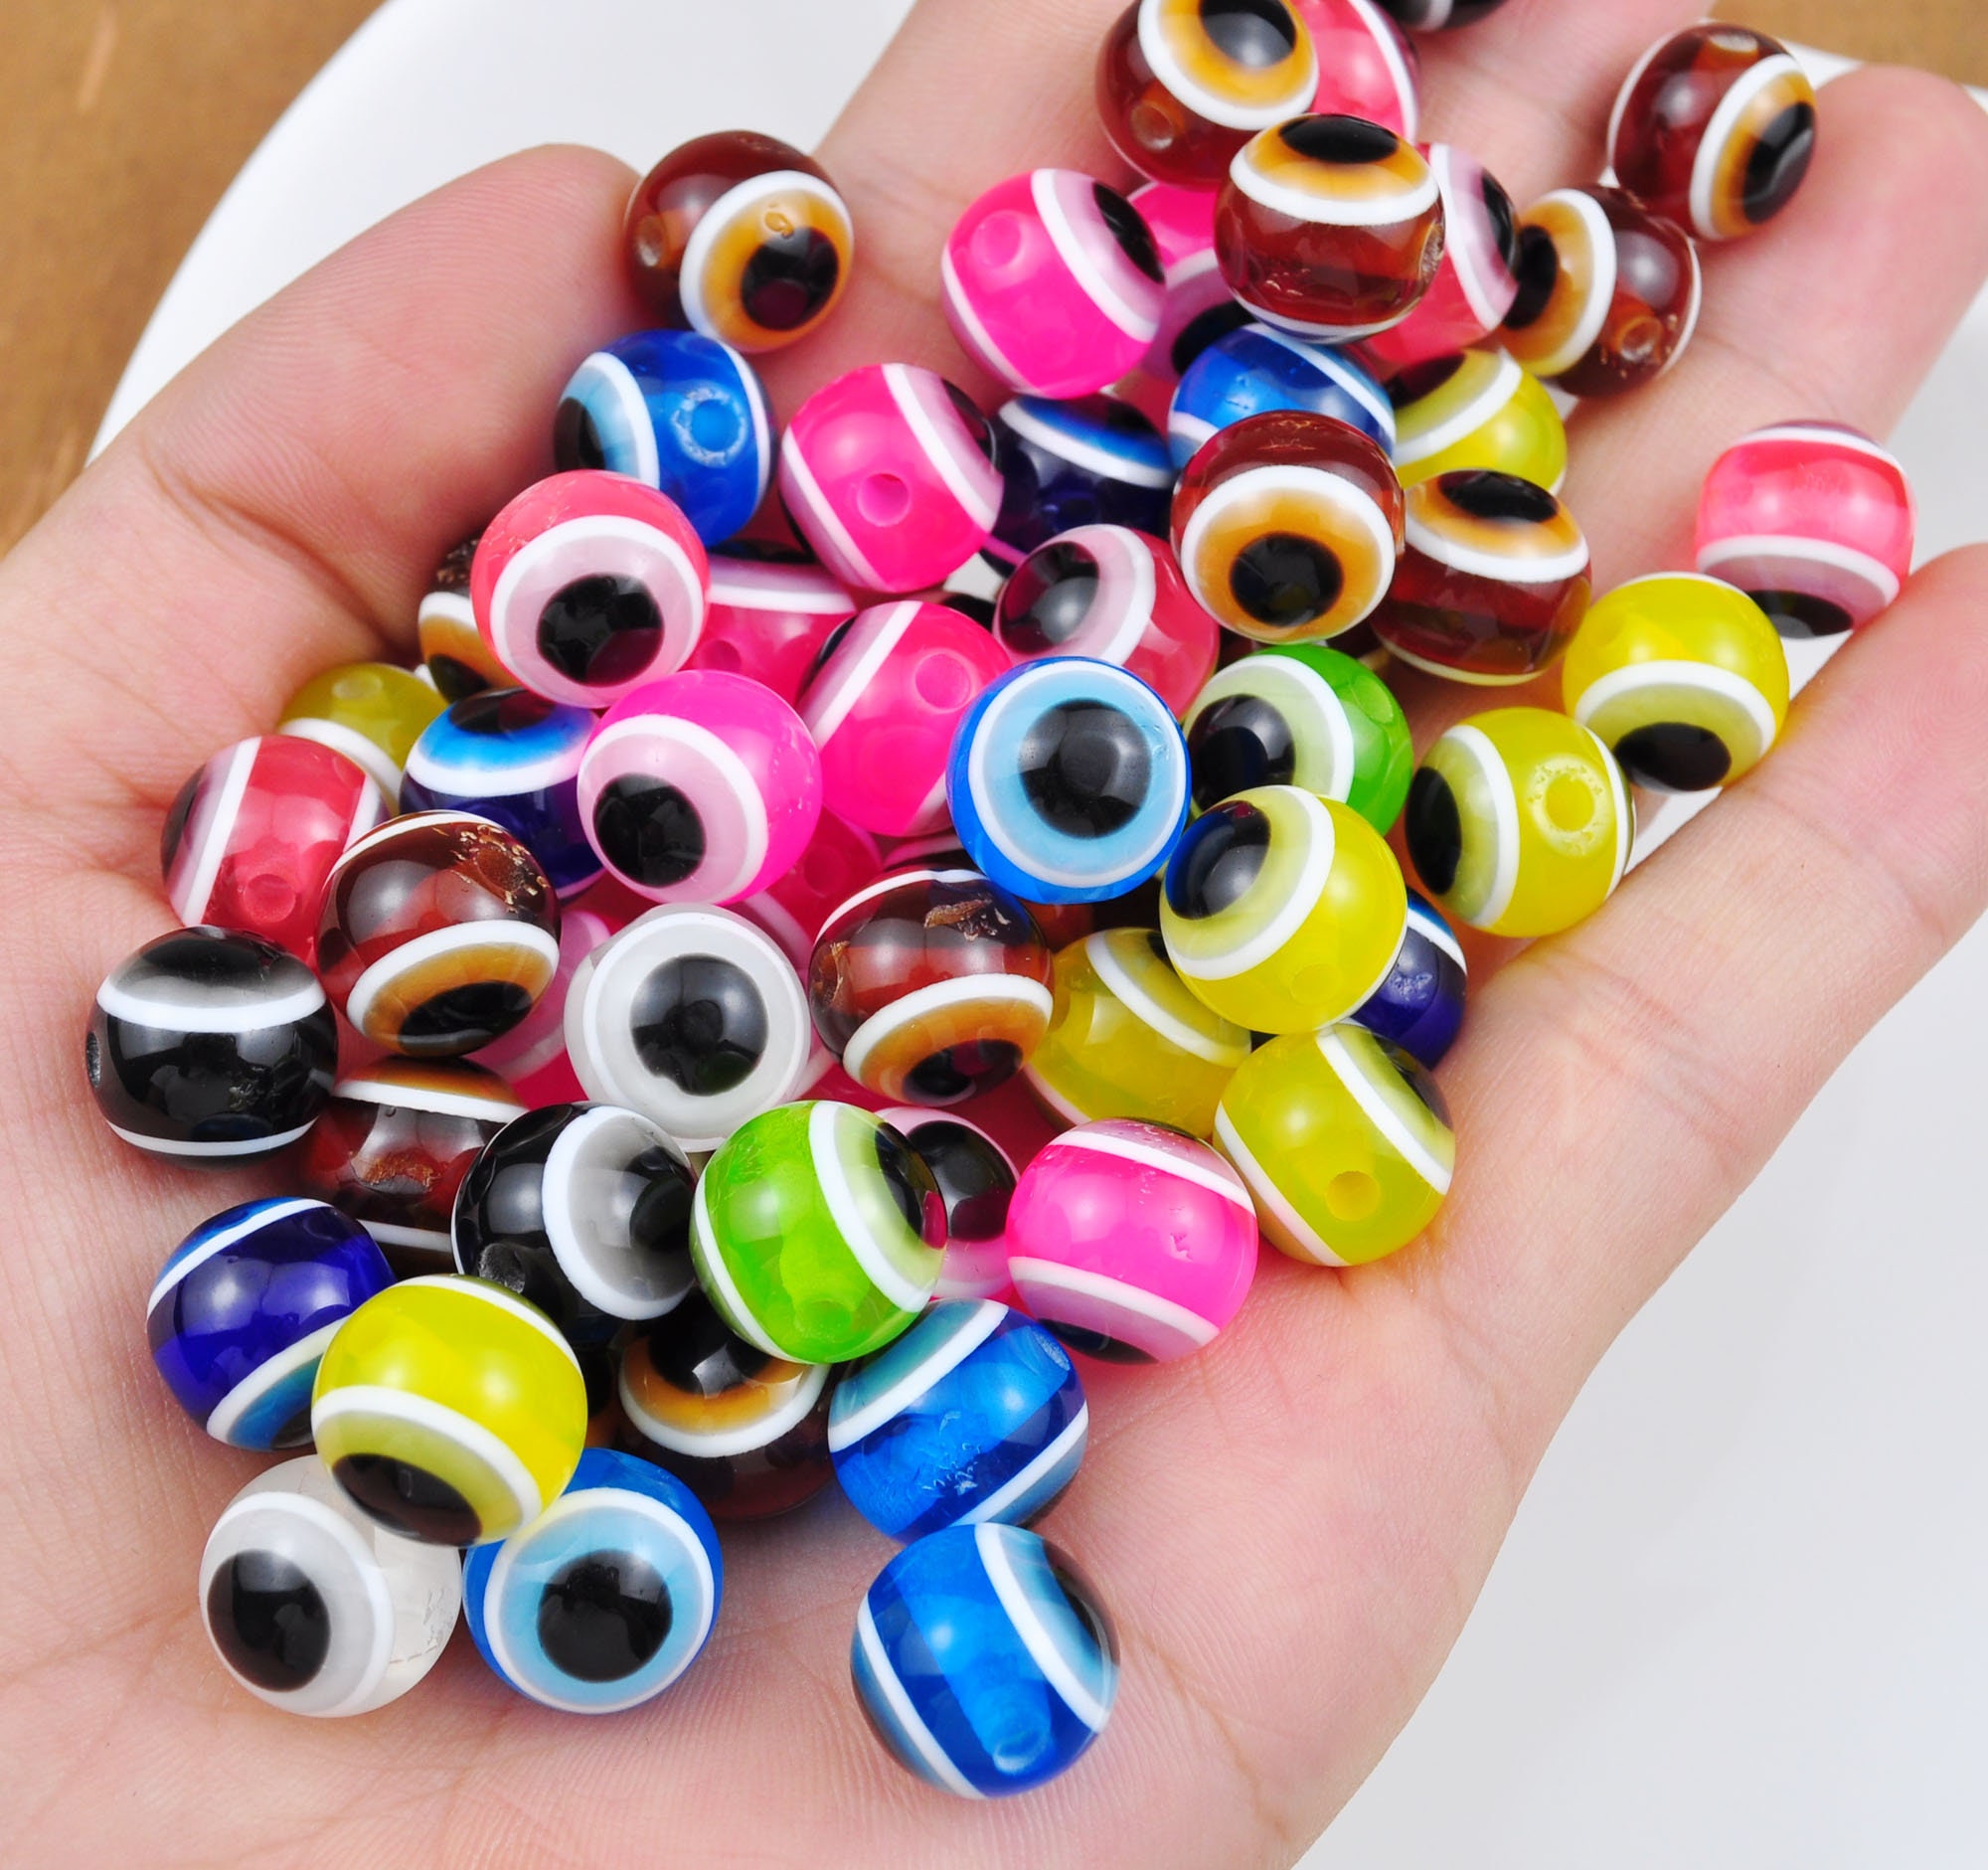 Mixed Transparent 12mm Round Resin Beads - Evil Eye Design (60pcs)